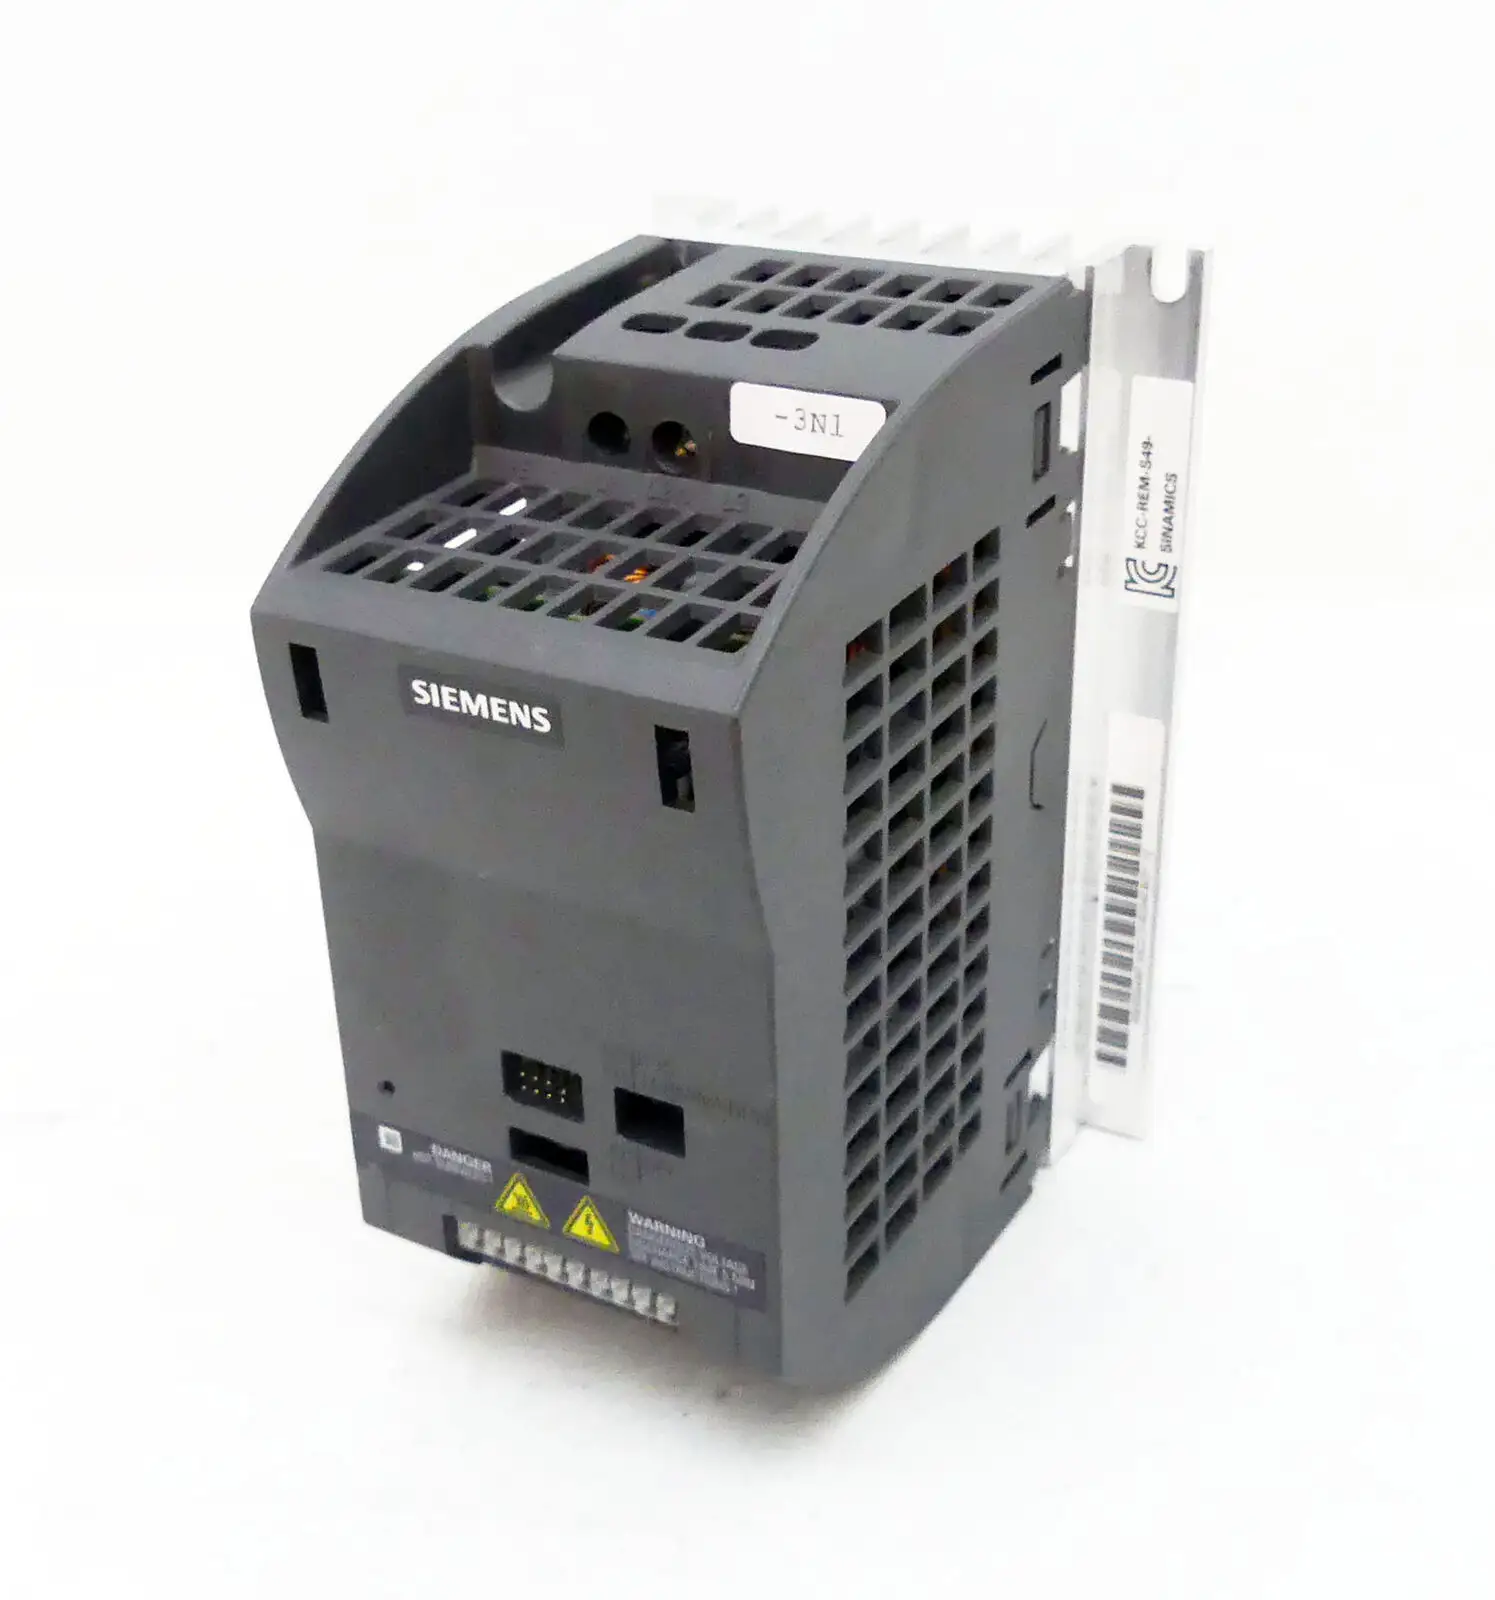 Siemens Originale 6SL3211-0AB21-5UB1 SINAMICS G110-CPM110 AC drive 1.5KW convertitore di frequenza 6SL3211-0AB21-5AB1